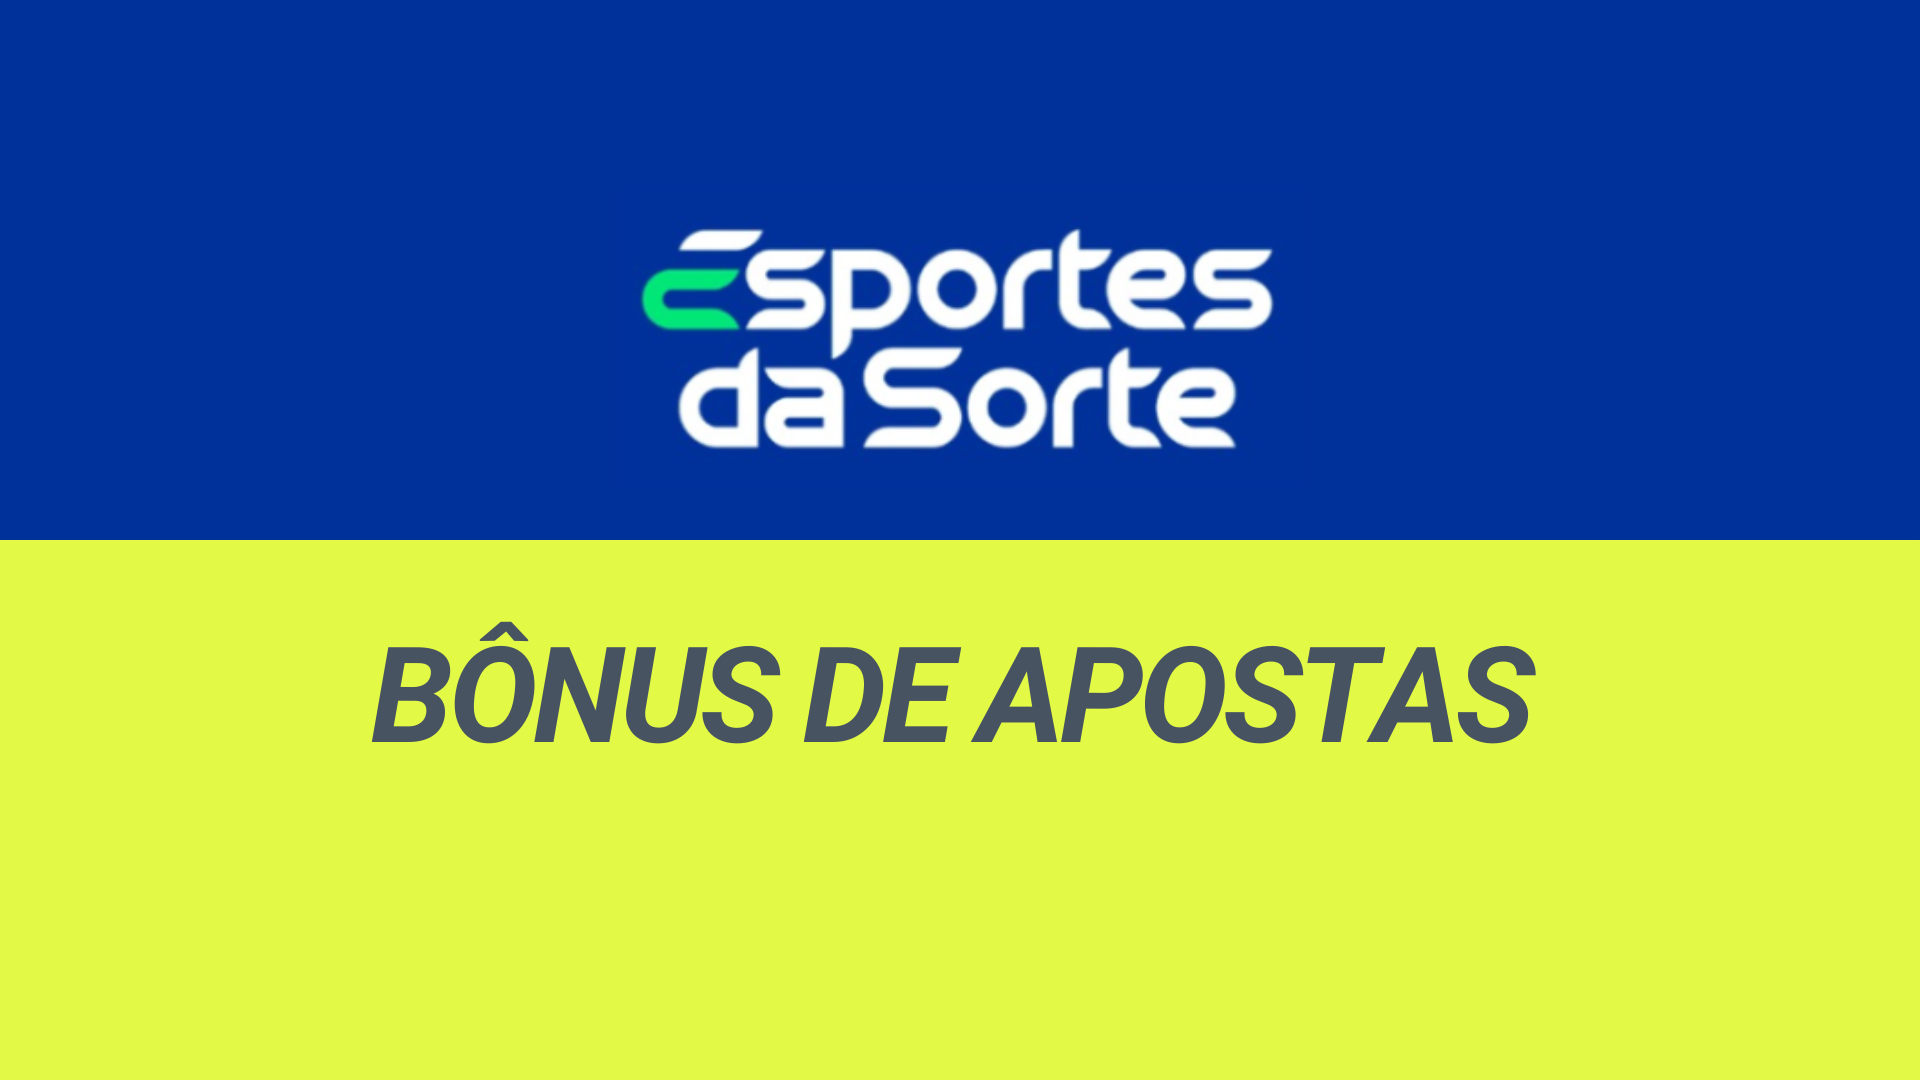 ApostaReal - Apostas Esportivas e Cassino Online no Brasil